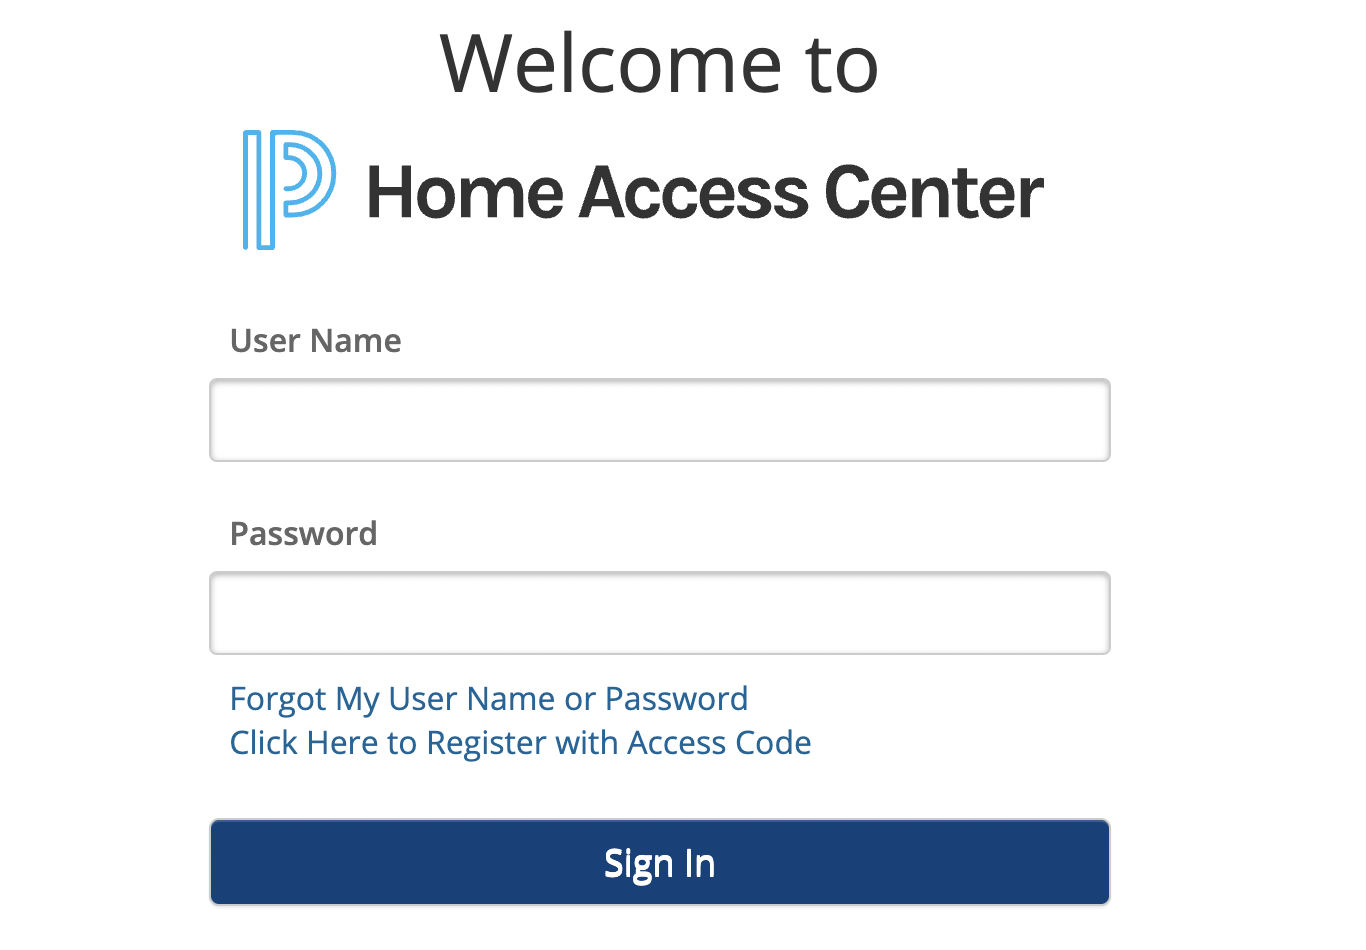 Home Access Center Login Prompt